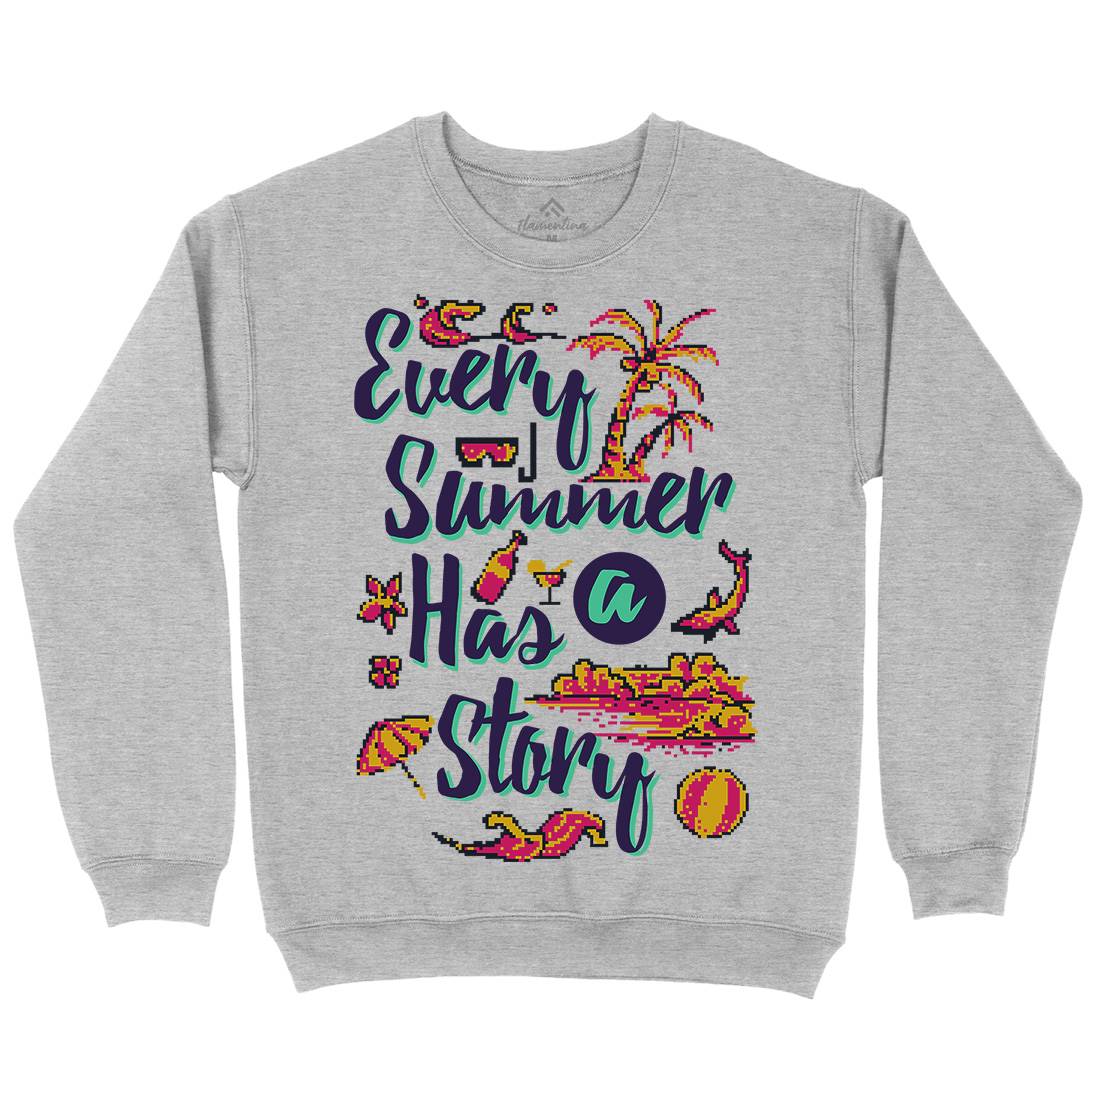 Every Summer Has A Story Kids Crew Neck Sweatshirt Nature B896